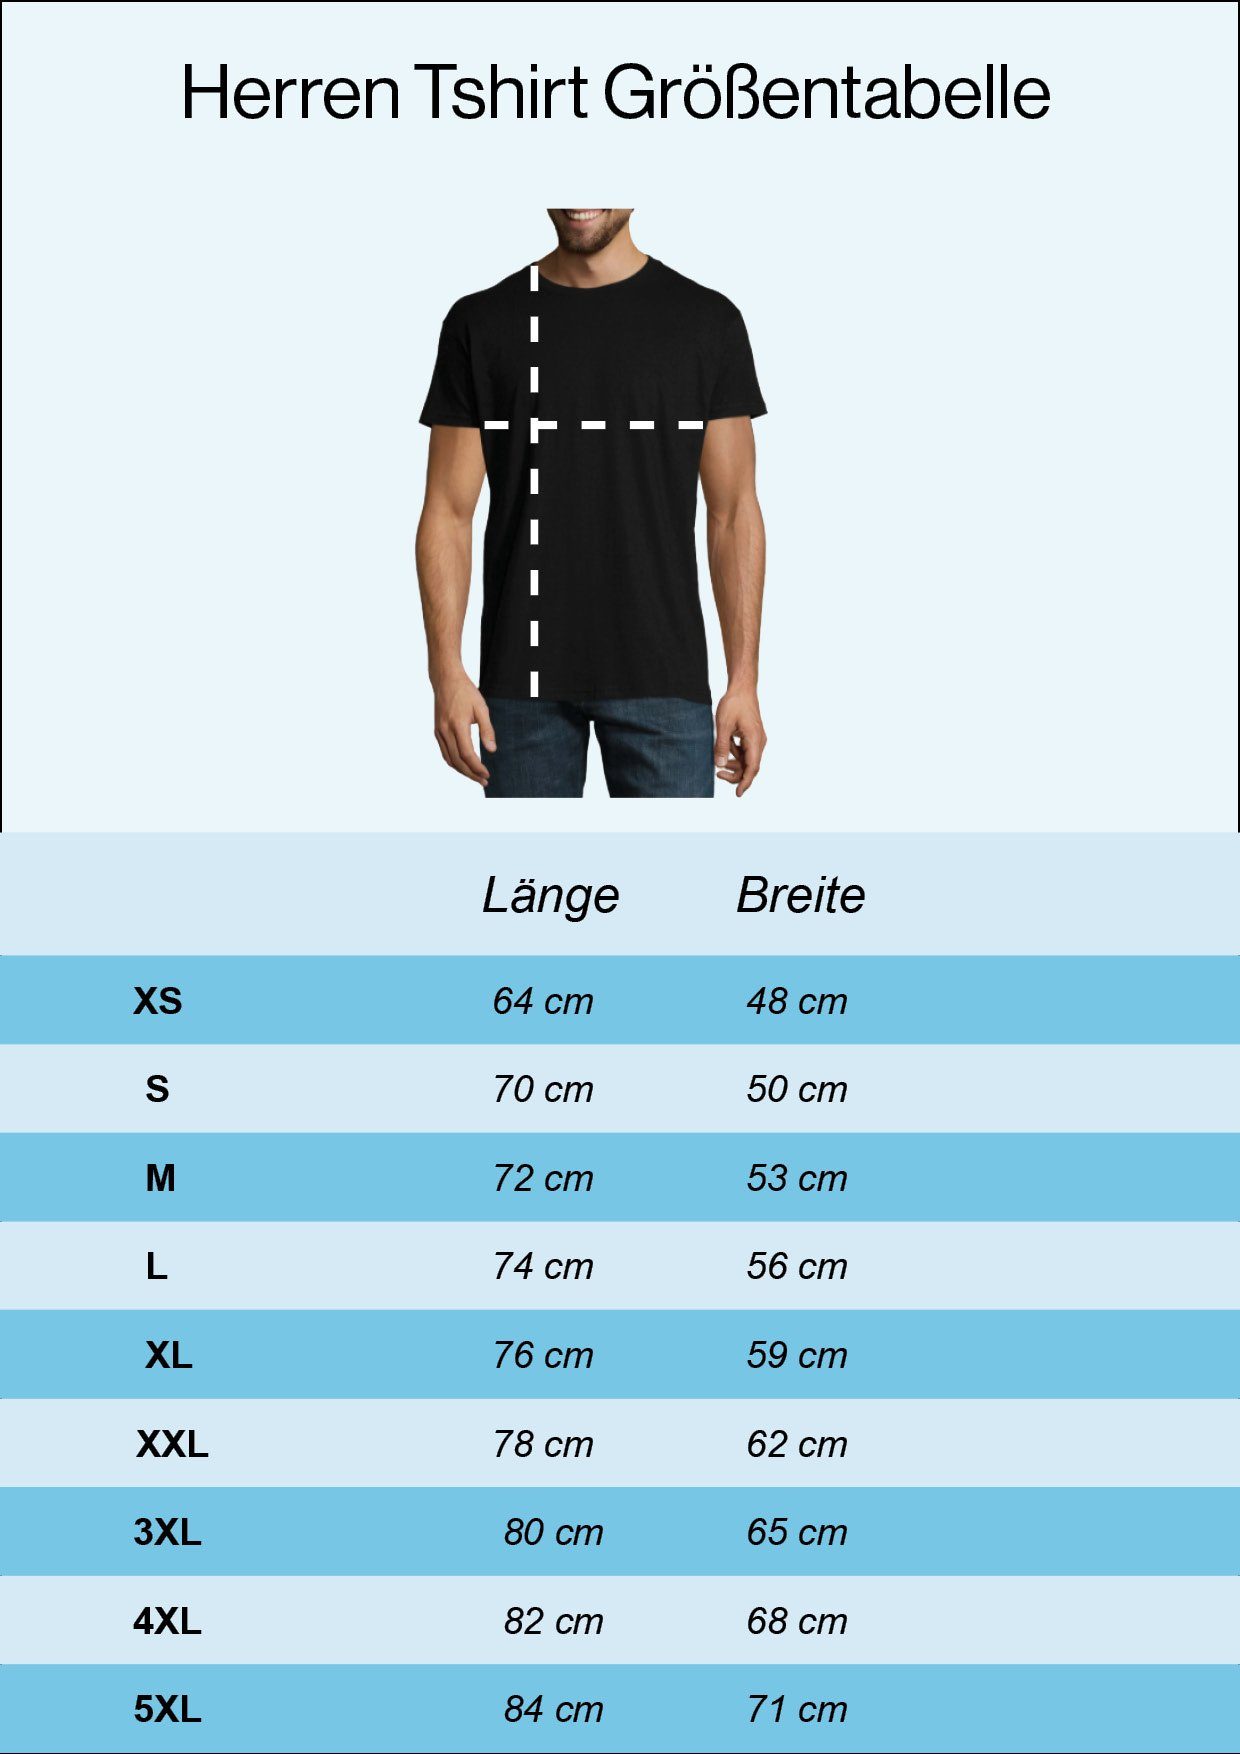 Eat Repeat Navy Youth Sleep Shirt Designz im Herren Gym Fun-Look T-Shirt